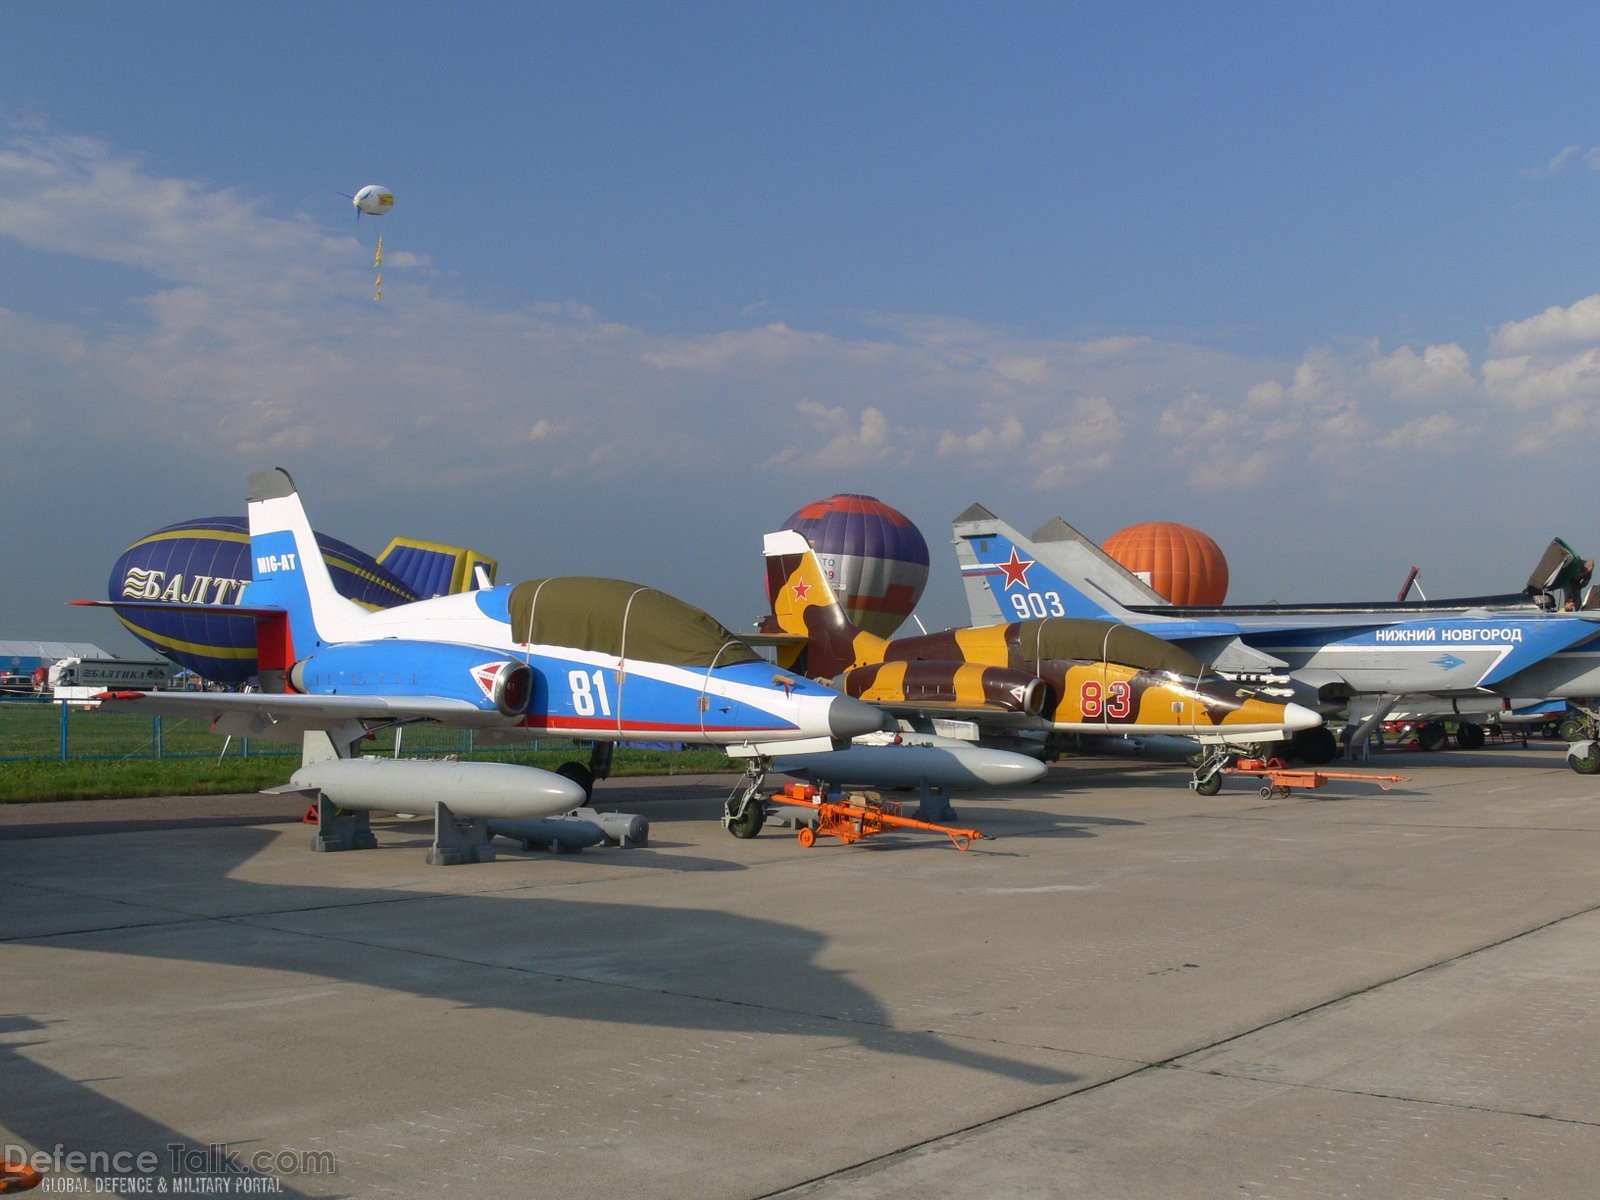 Su-24, Jet Trainers - MAKS 2007 Air Show